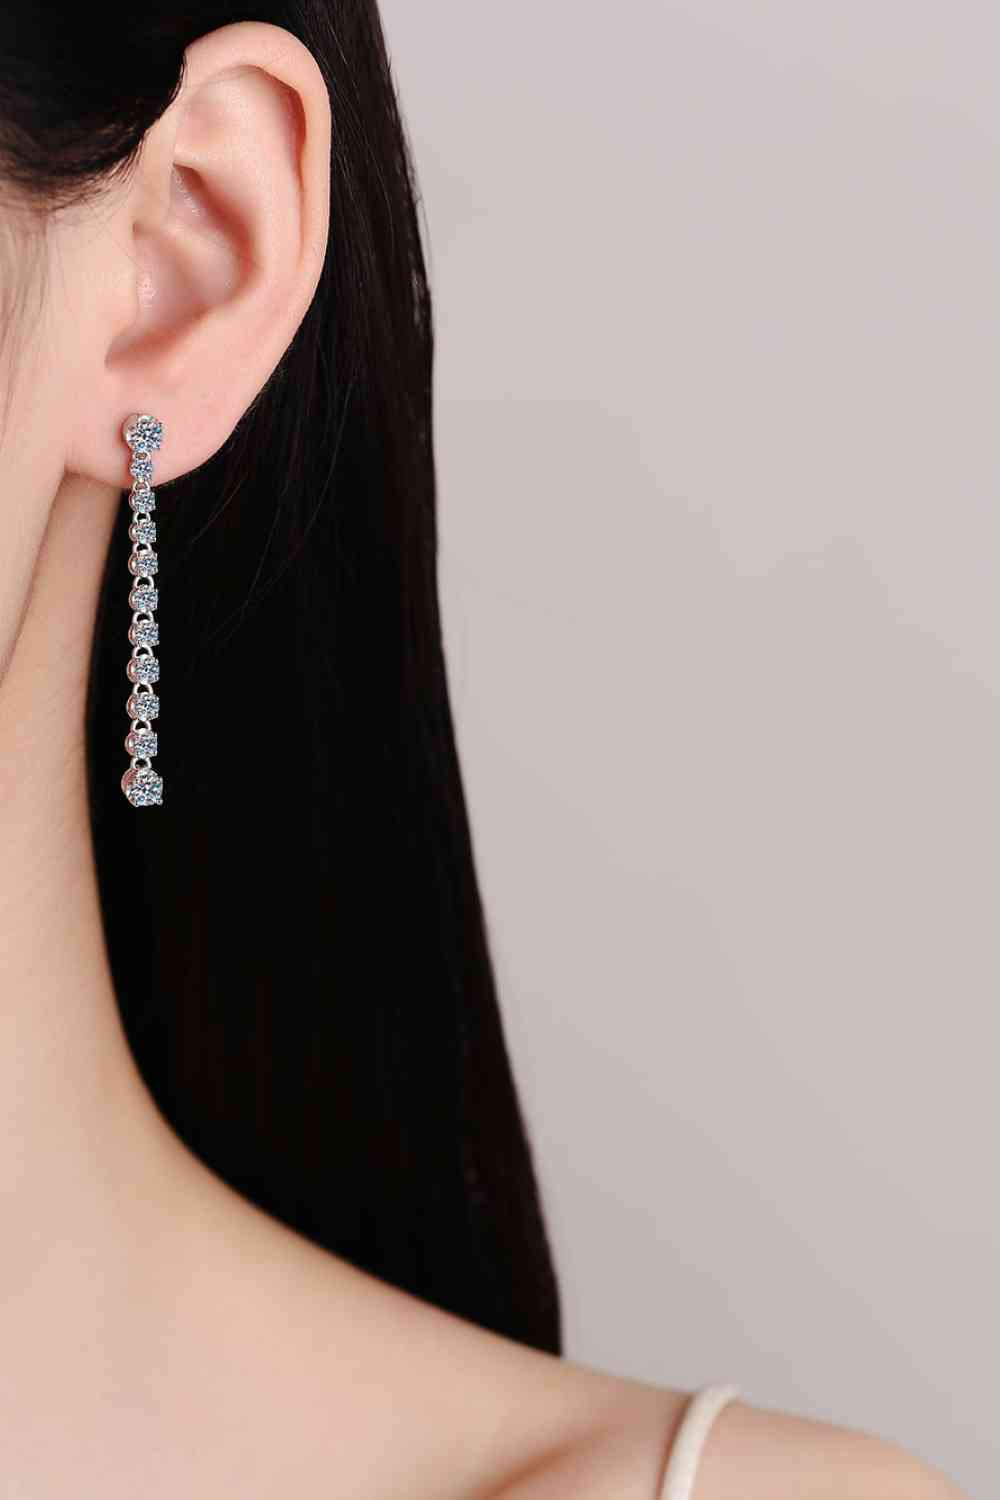 a woman wearing a pair of diamond earrings